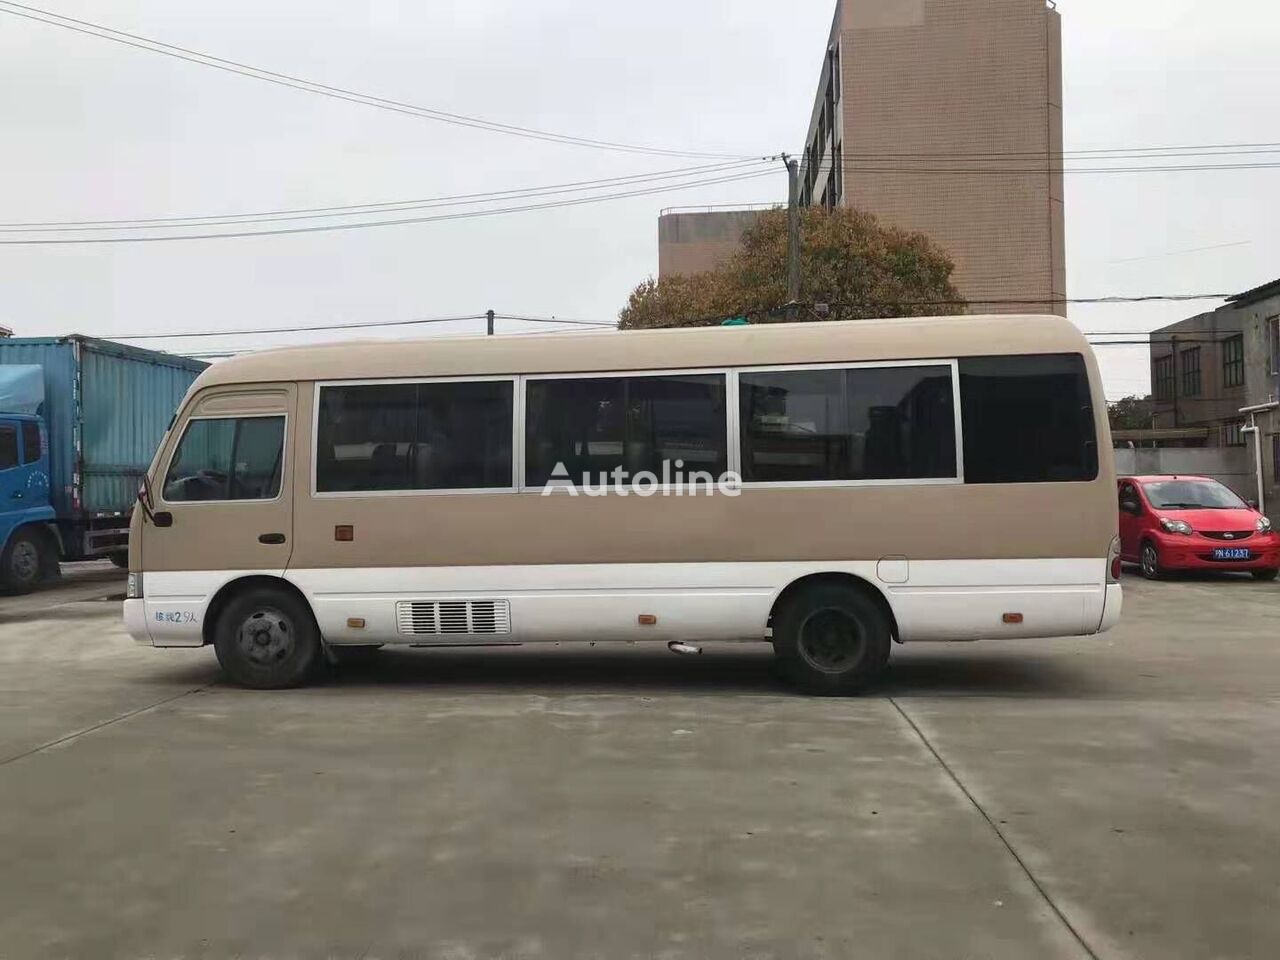 Toyota Coaster city bus